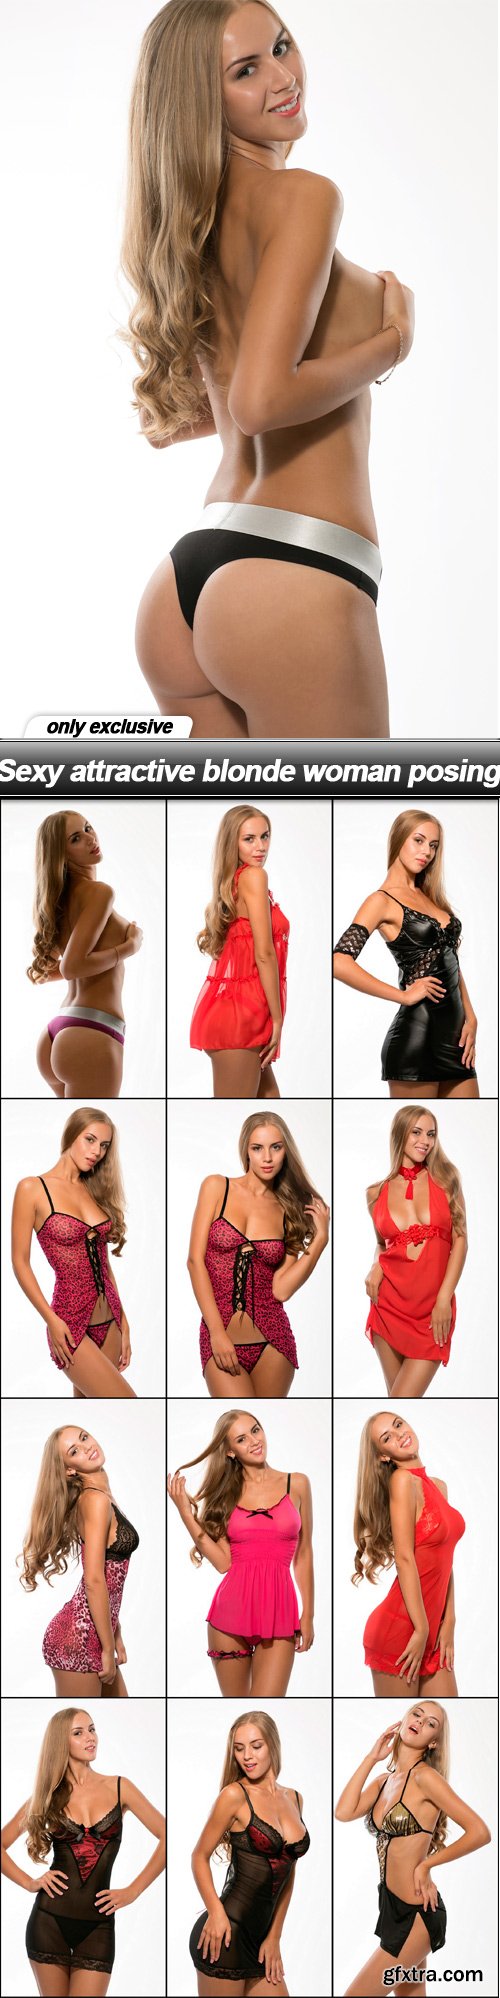 Sexy attractive blonde woman posing - 13 UHQ JPEG